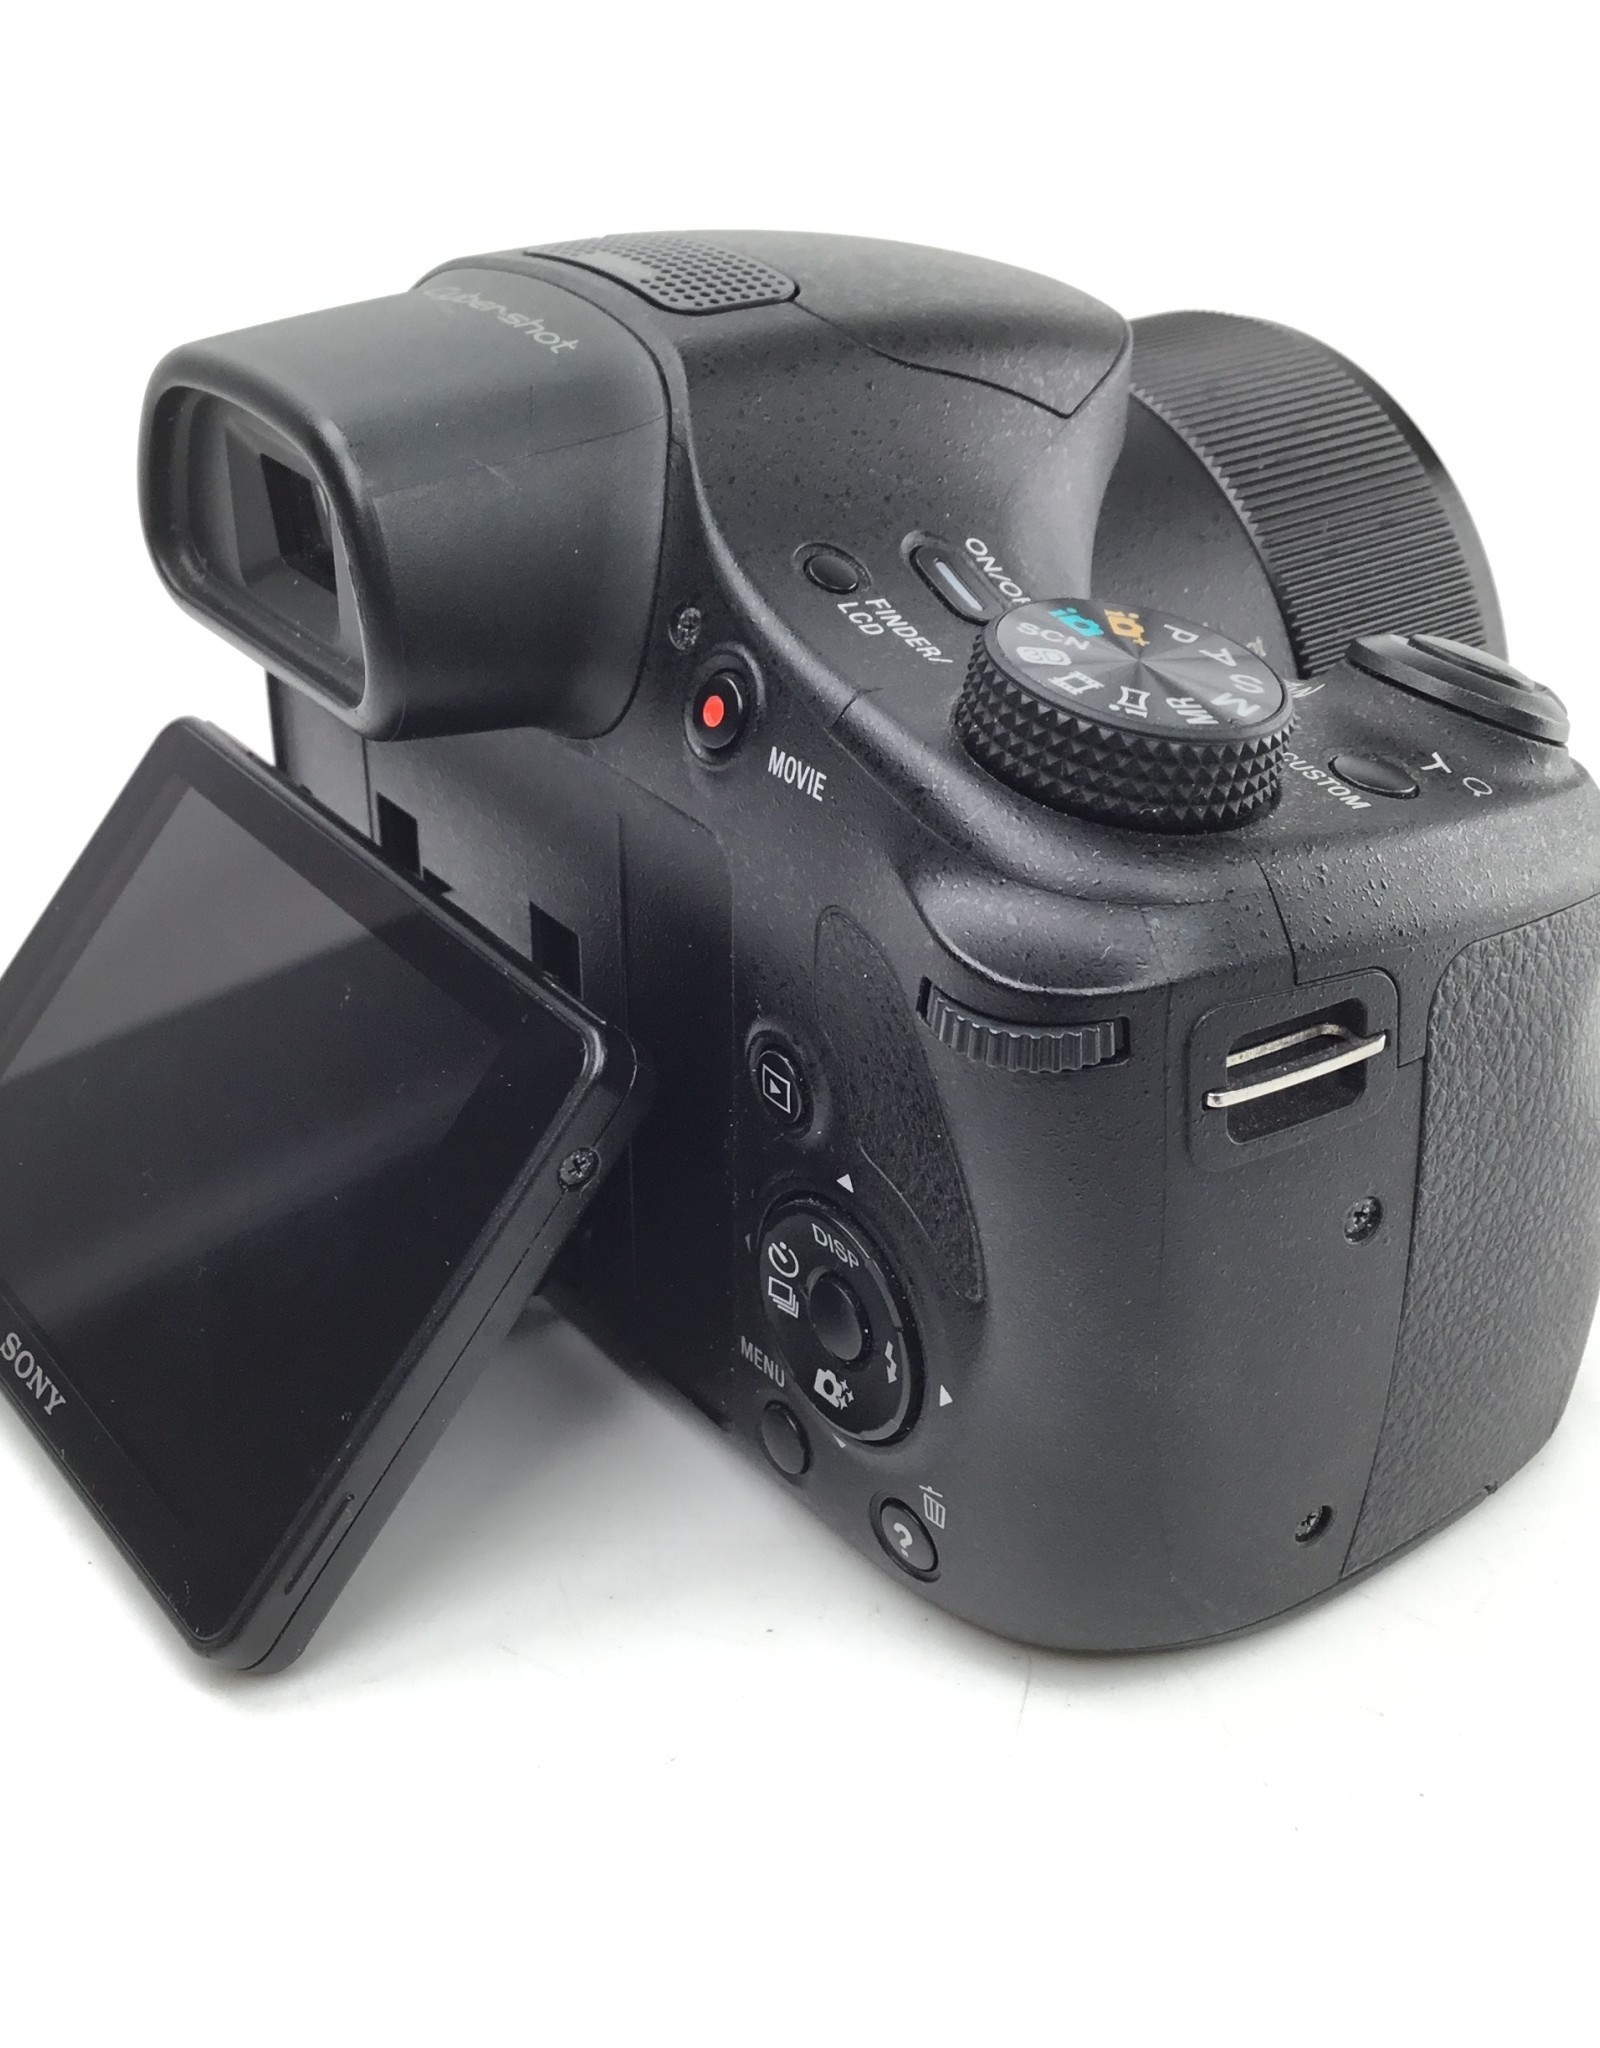 SONY Sony DSC-HX300 Camera Used Good